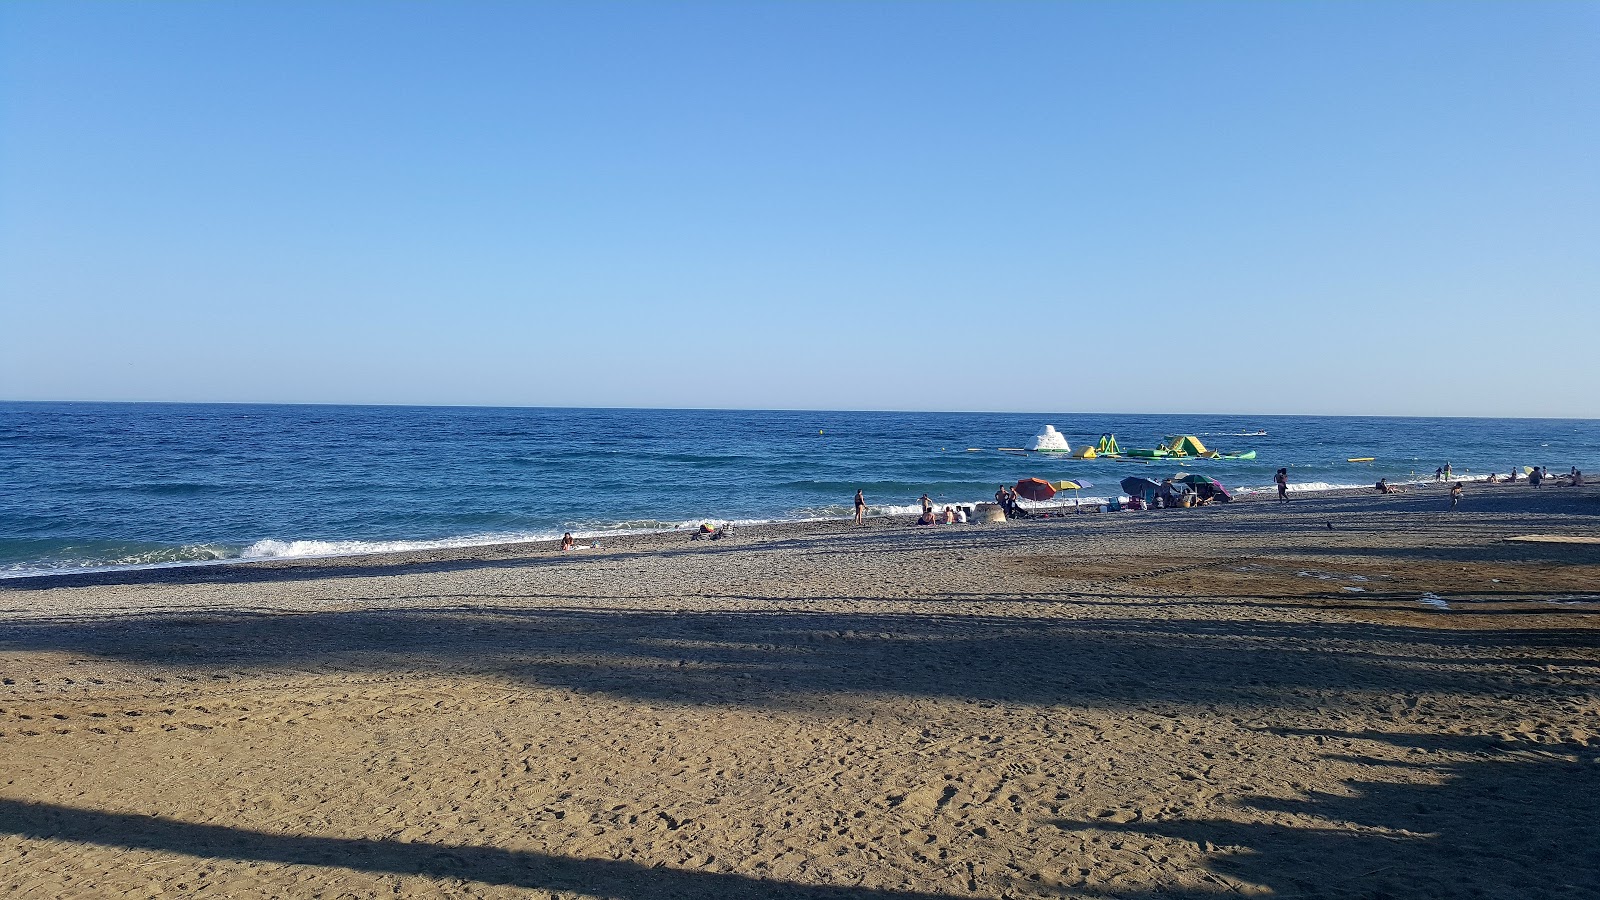 Foto von Playa de San Pedro de Alcantara mit langer gerader strand